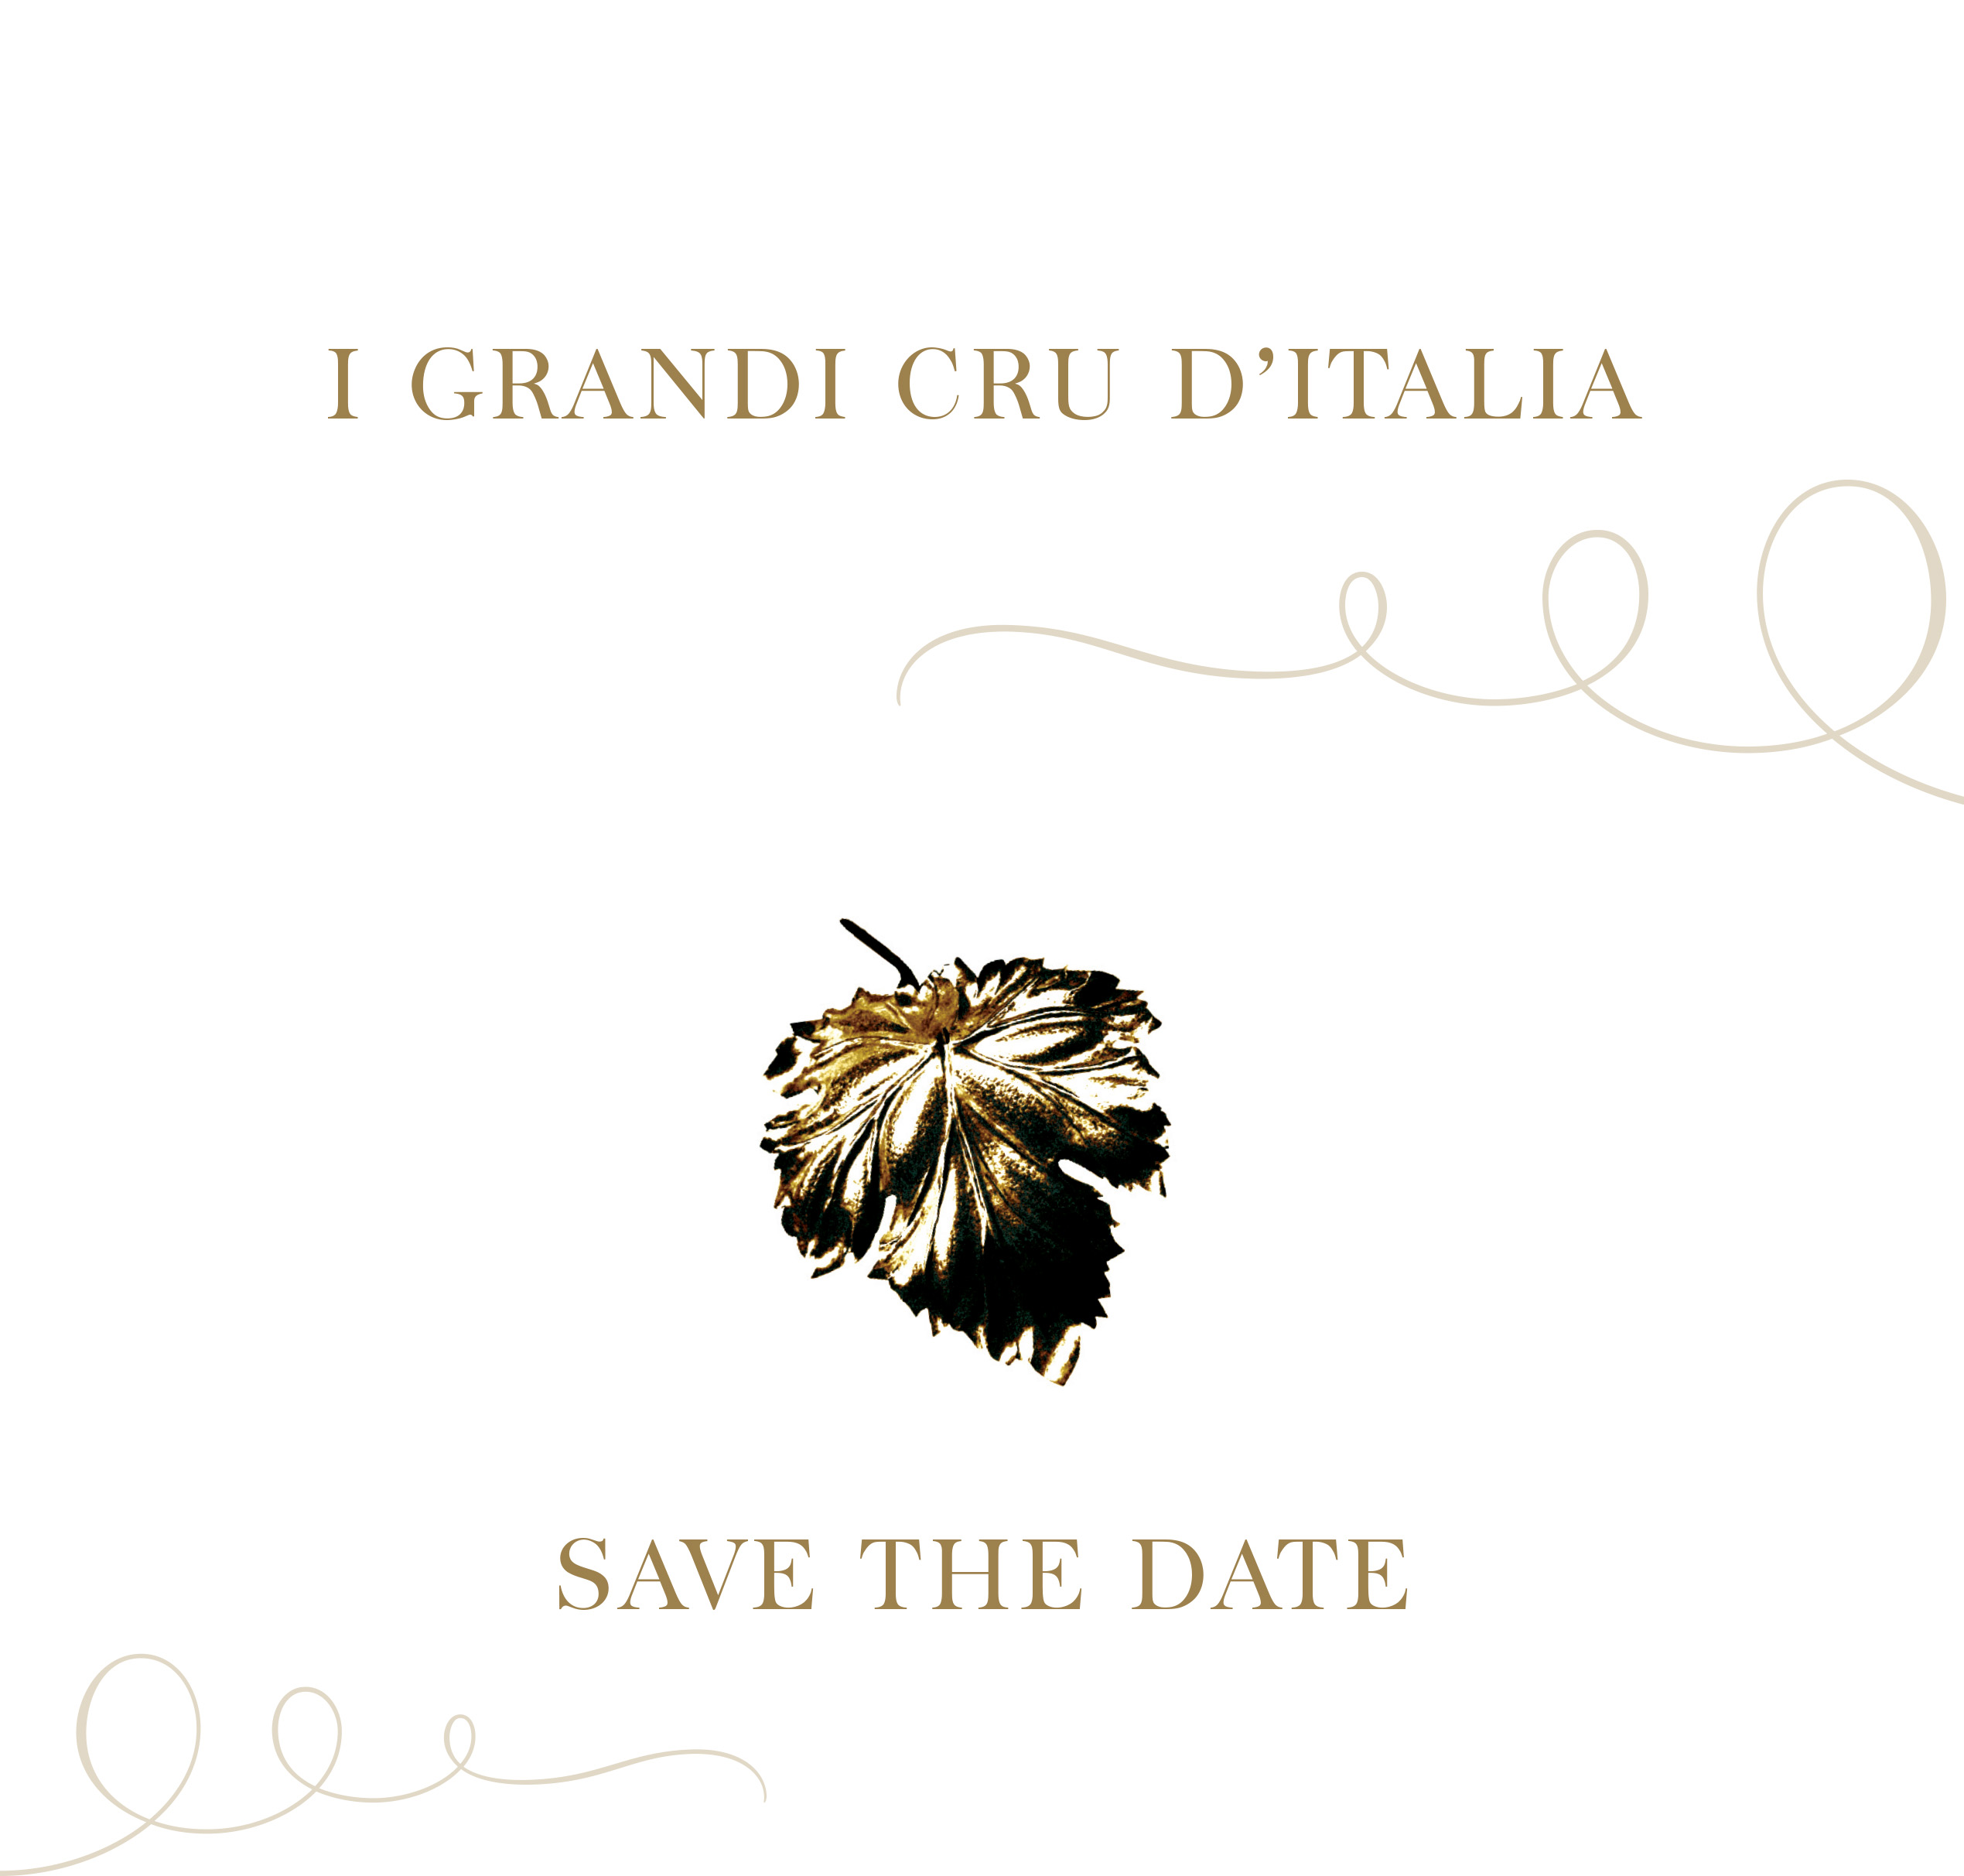 Save the date_Grandi Cru d'Italia_2017_eng-1.jpg